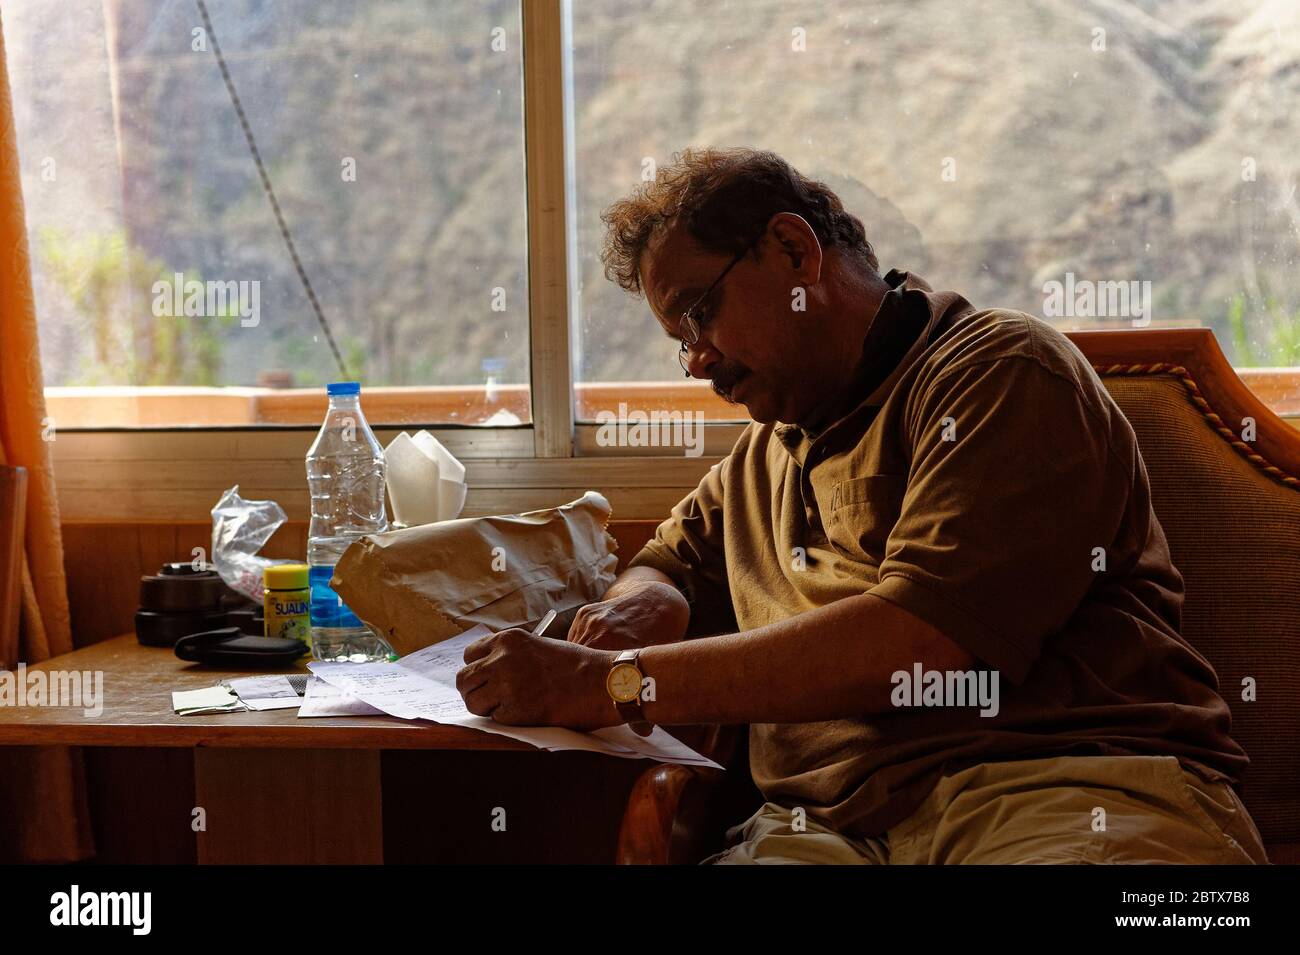 Man writing with pen near window Stock Photo